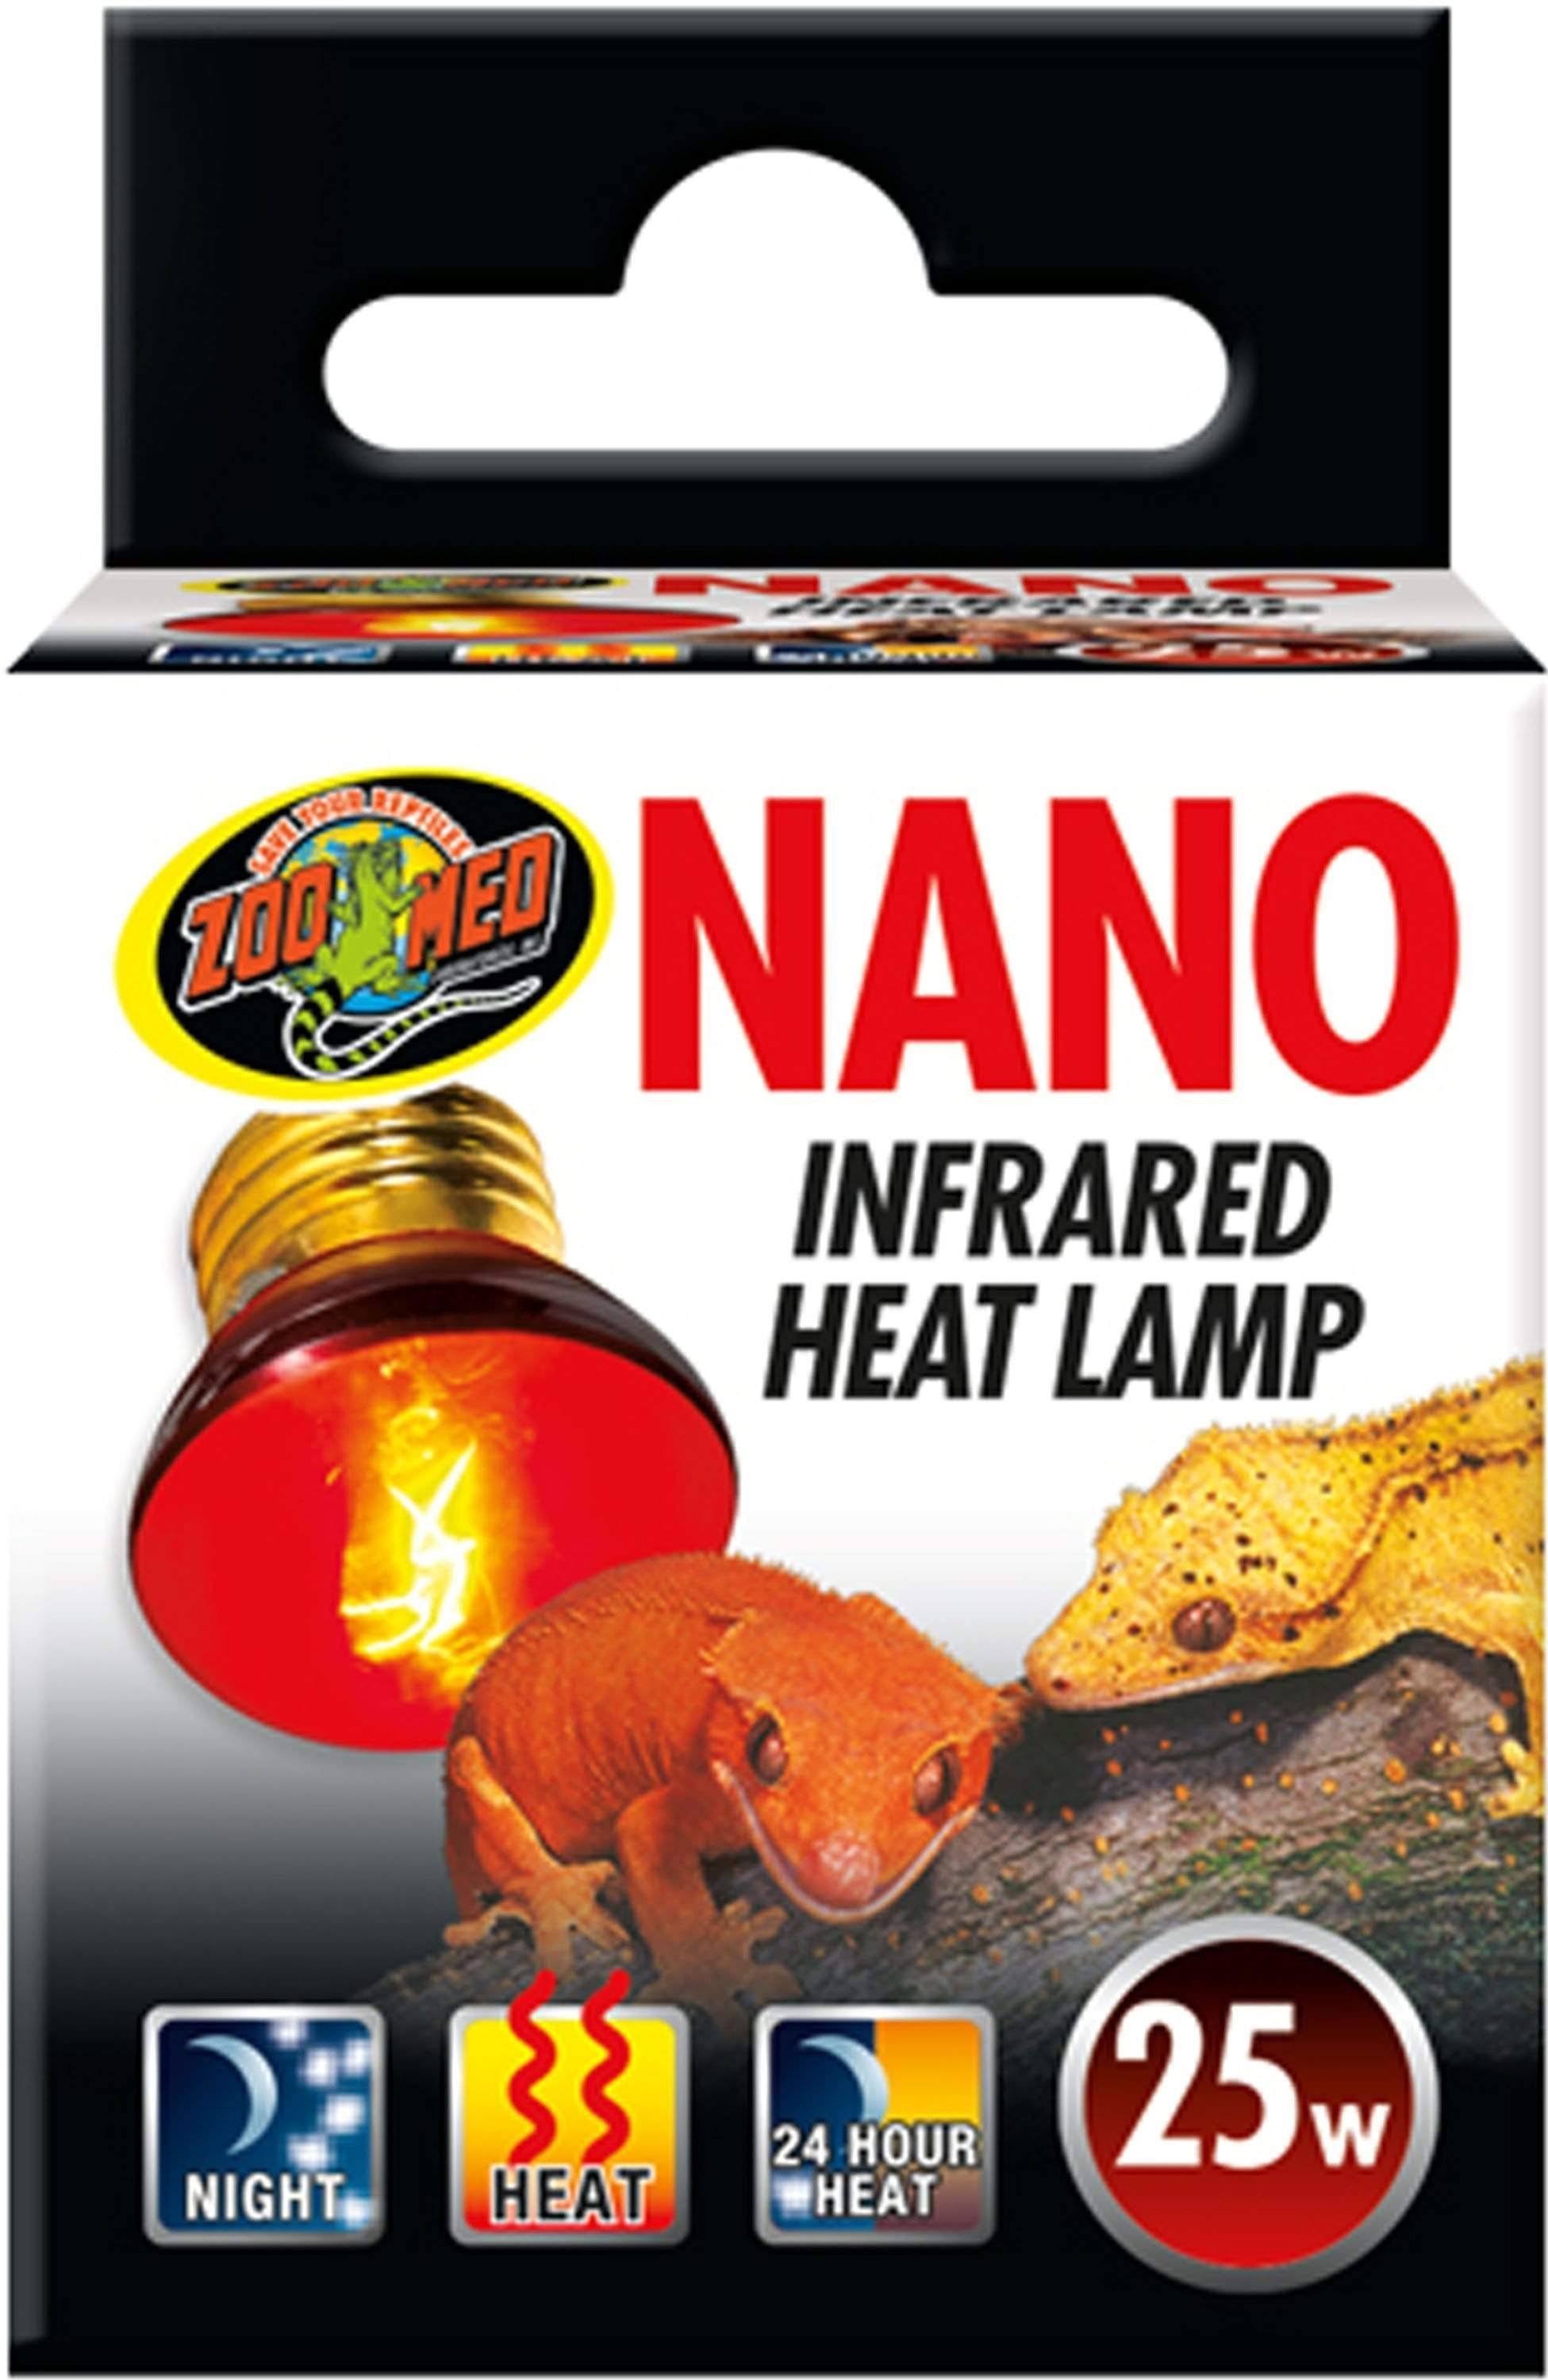 Zoo Med SL-25N Nano Basking Spot Lamp - 25W